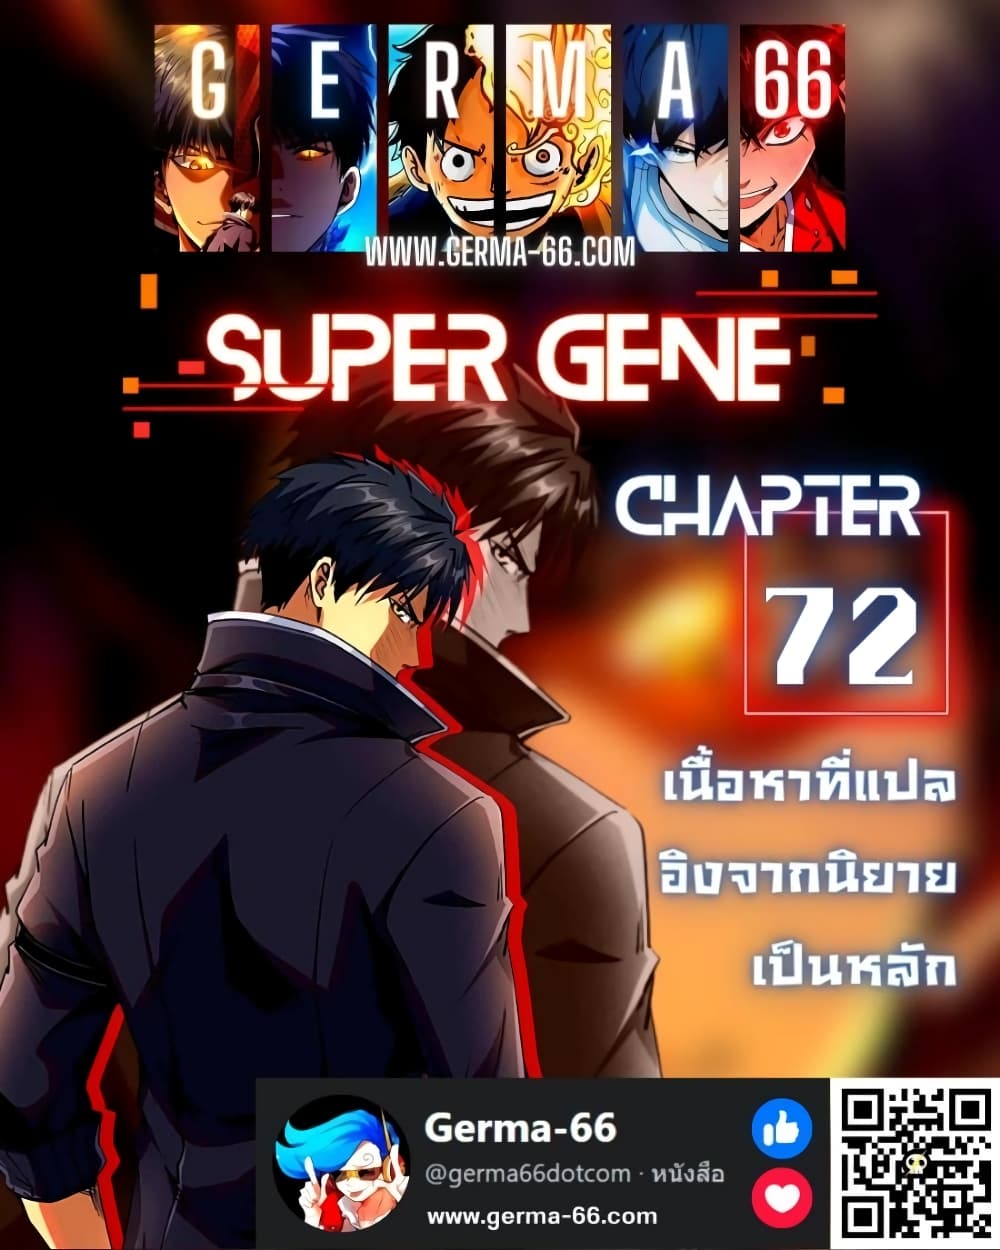 Super God Gene 72-72